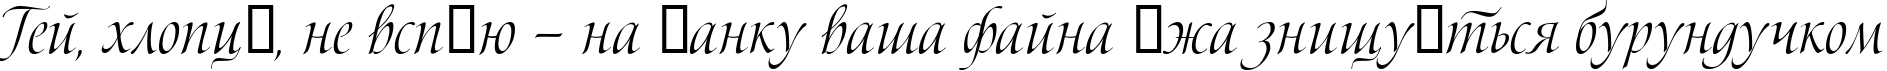 Пример написания шрифтом Bolero script текста на украинском